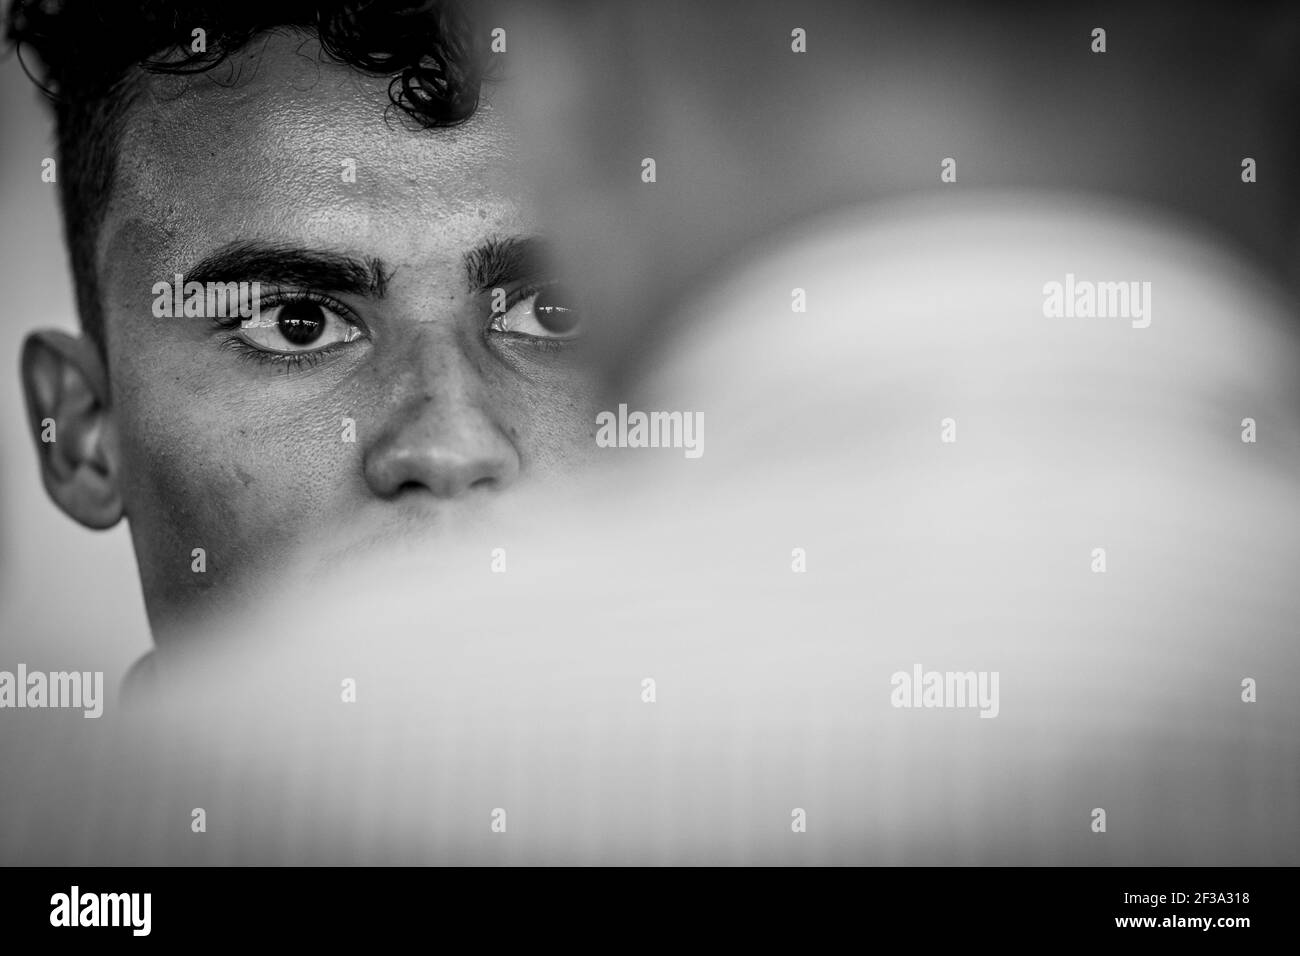 WEHRLEIN Pascal (ger), Mahindra M5Electro Team Mahindra Racing, Portrait während der Formel-E-Meisterschaft 2019, in Bern, Schweiz vom 20. Bis 22. juni - Foto Clement Luck / DPPI Stockfoto